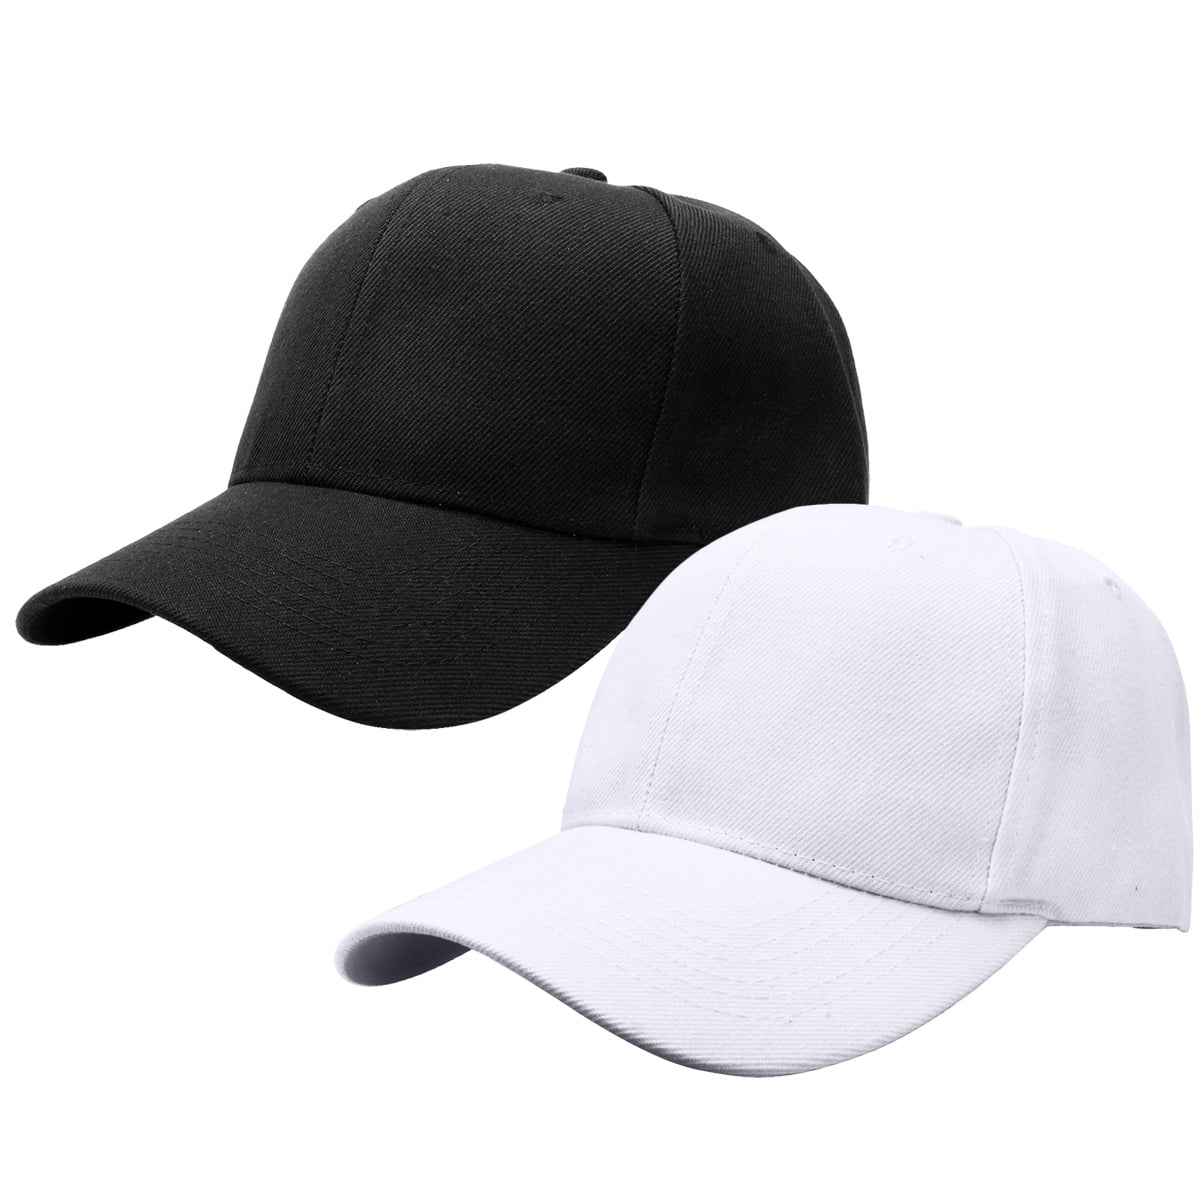 The Beach Boys Pet Sounds Cotton Baseball Cap with Adjustable Hat Men 